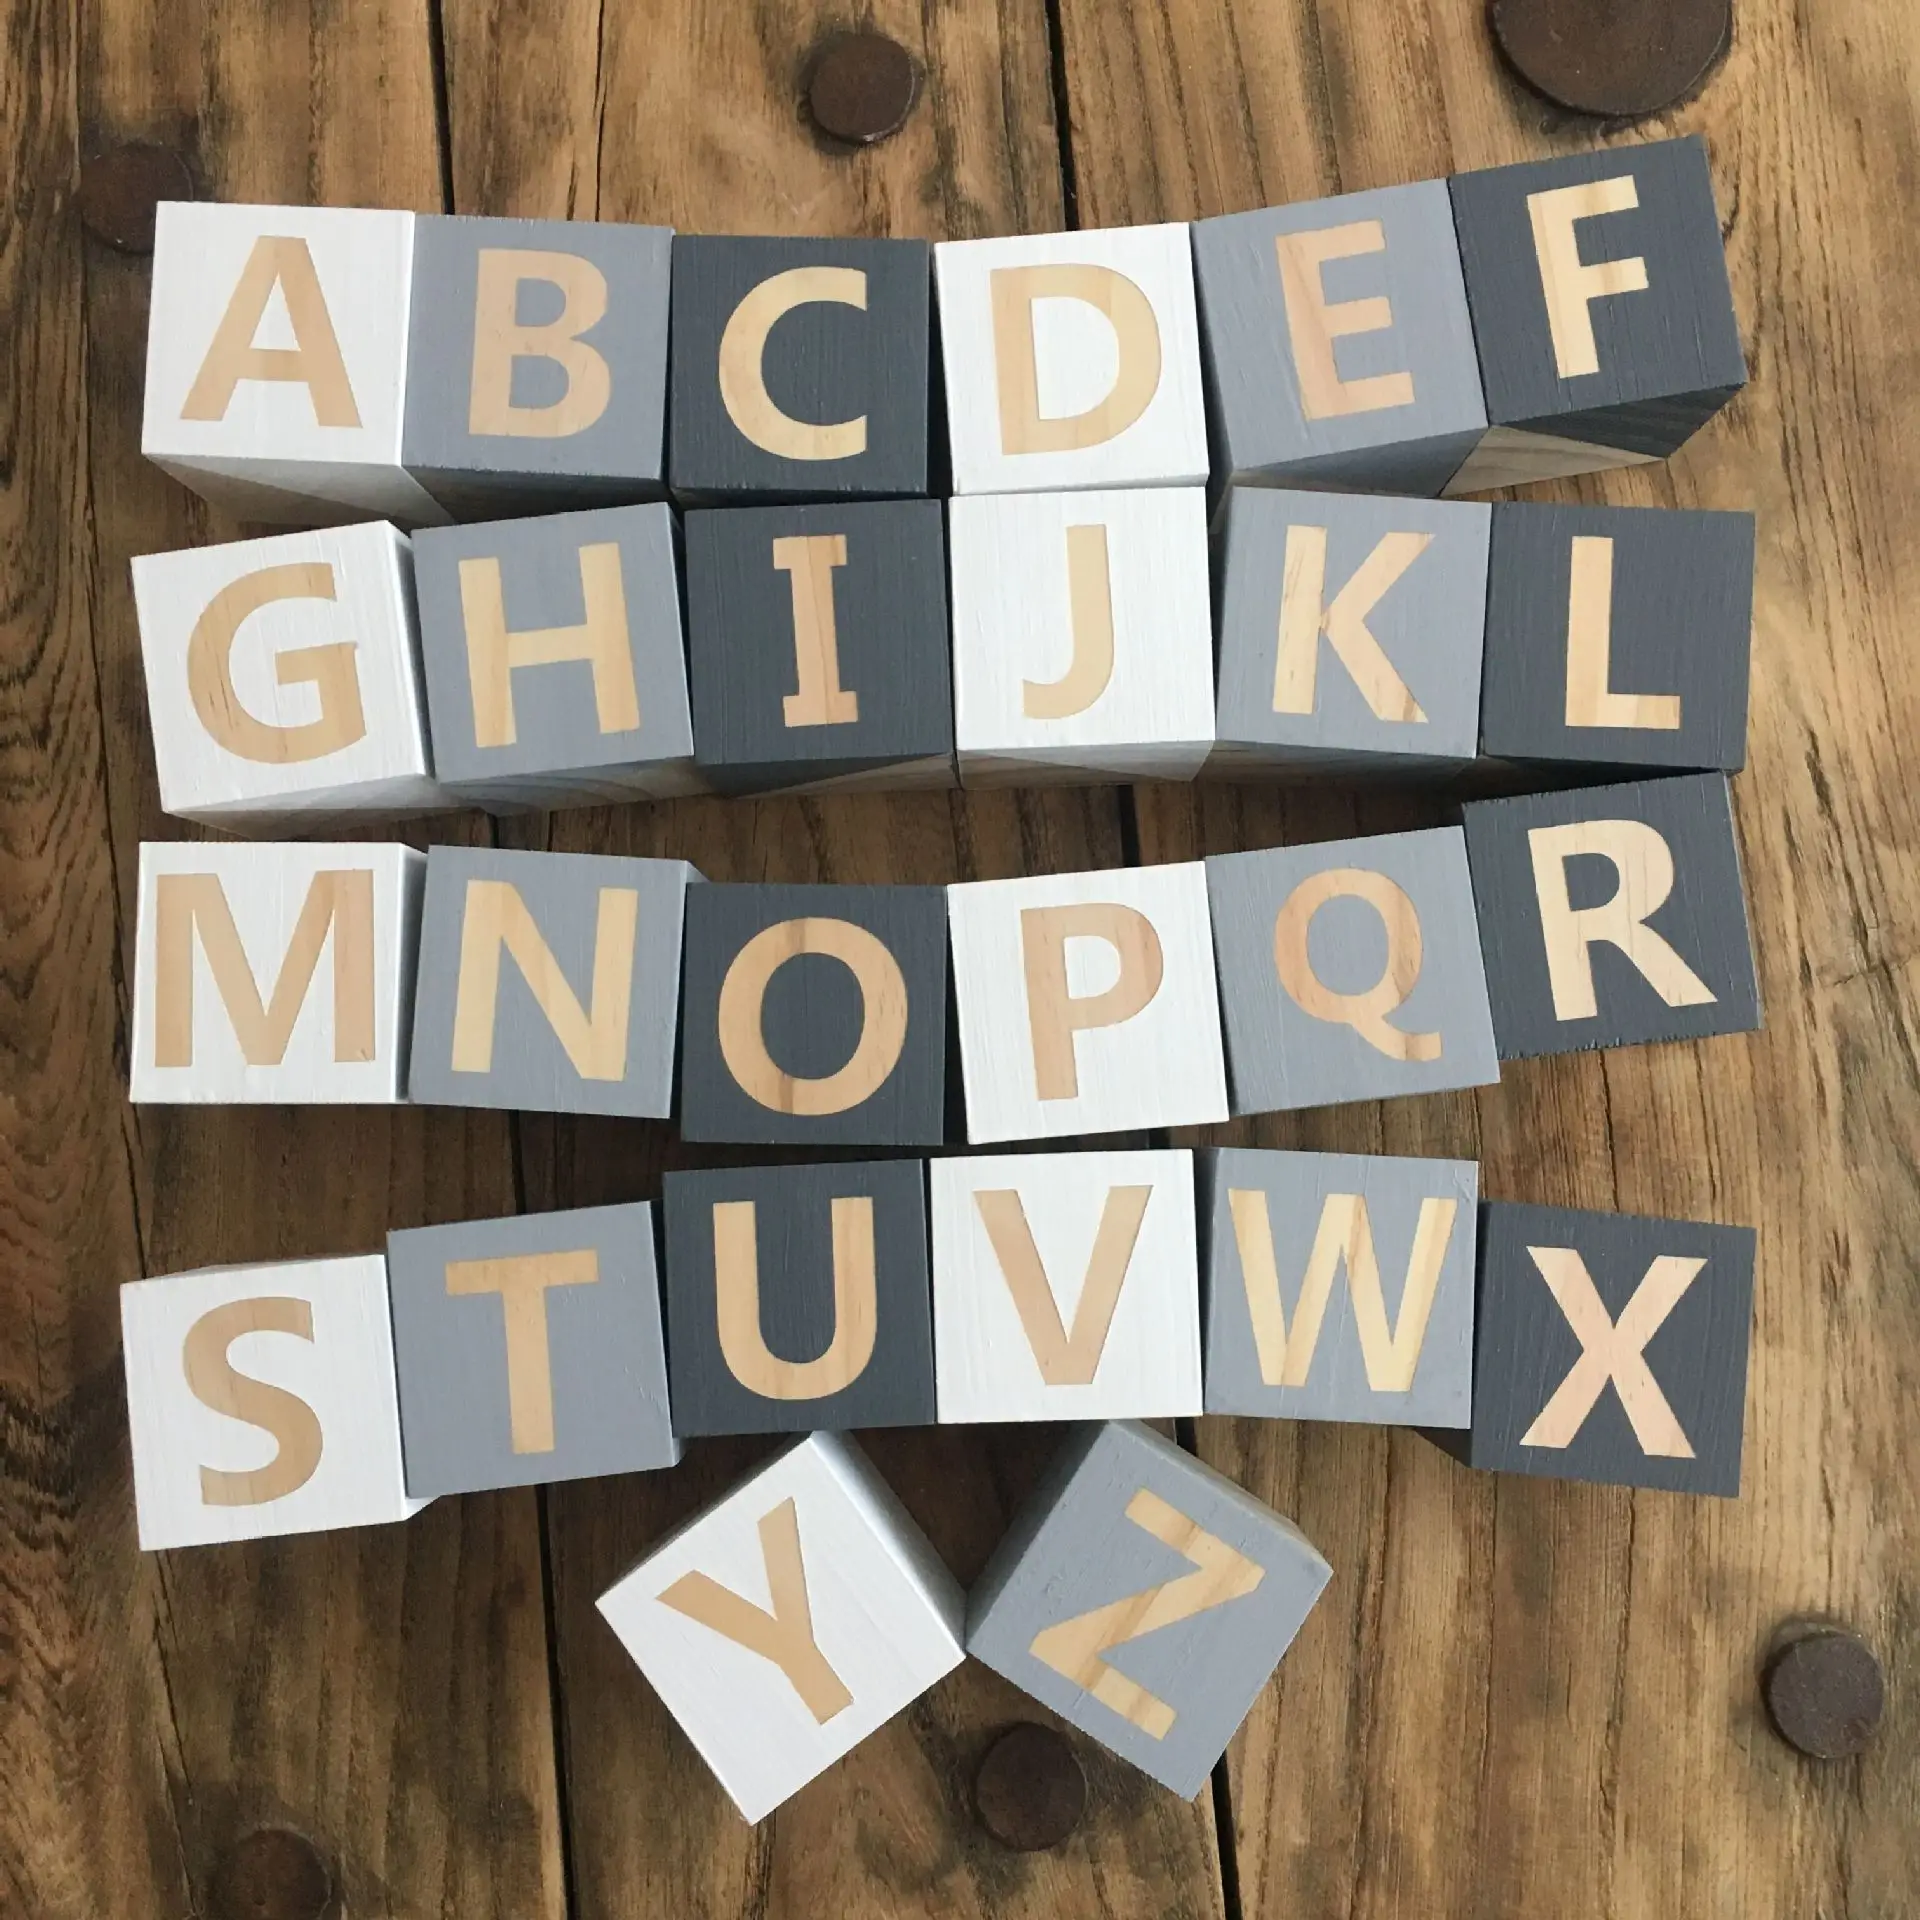 

Nordic Style Wooden Alphabet Letters Baby Name Blocks for Nursery Bedroom Photo Shoot Decor Newborn Keepsake Gift White Pink